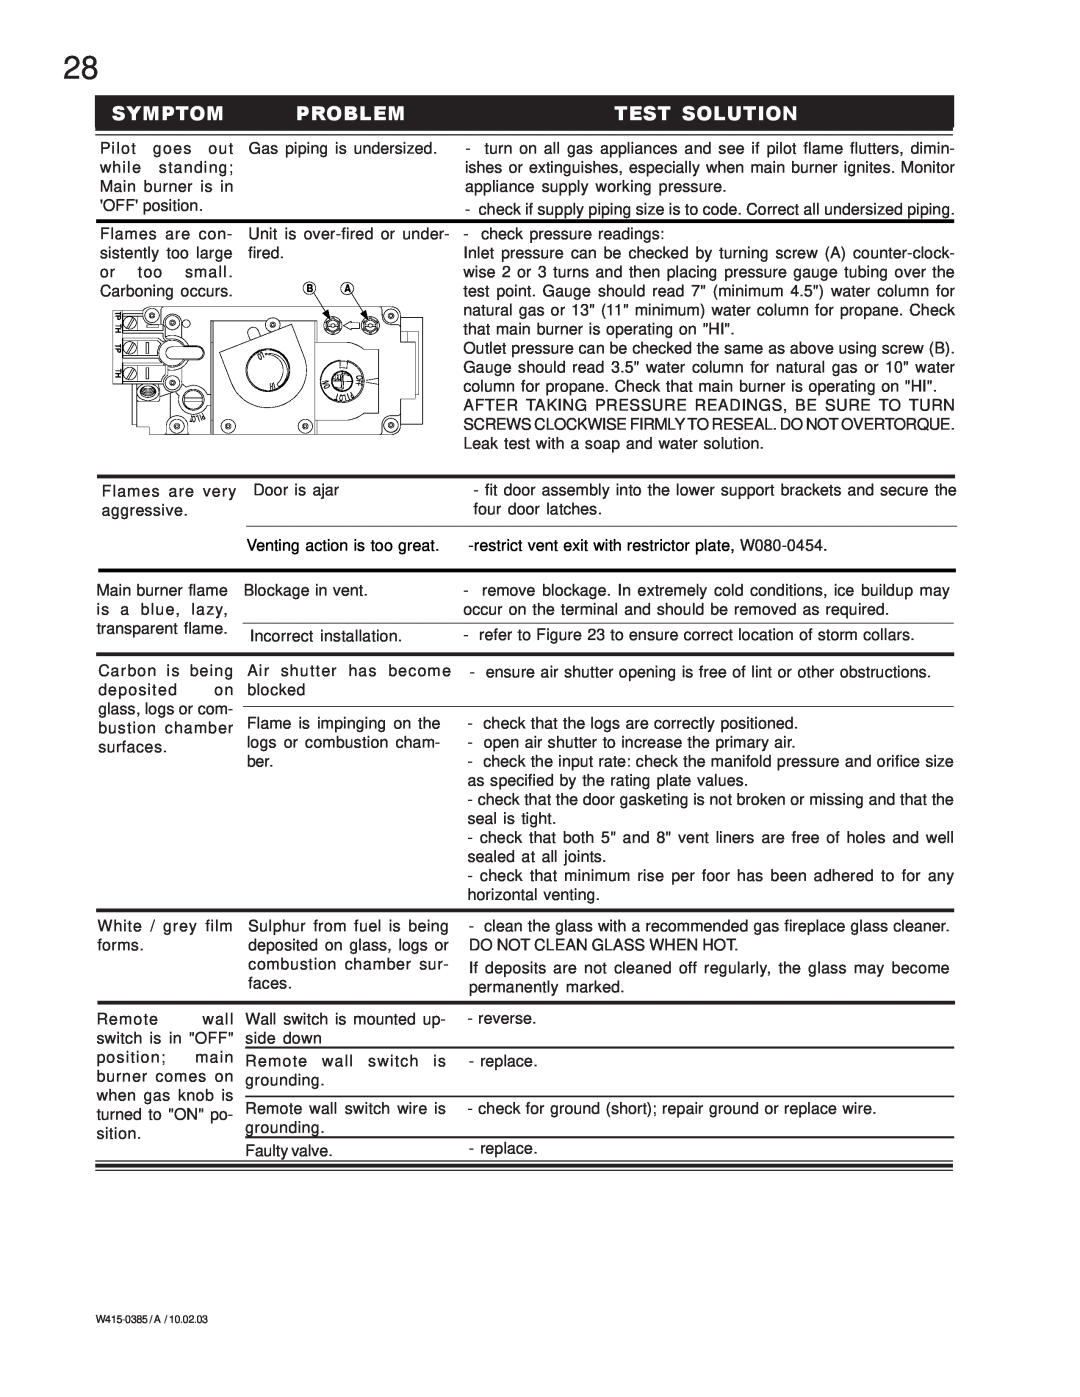 Continental BCDV42P, BCDV42N manual Symptom, Problem, Test Solution, Toli 